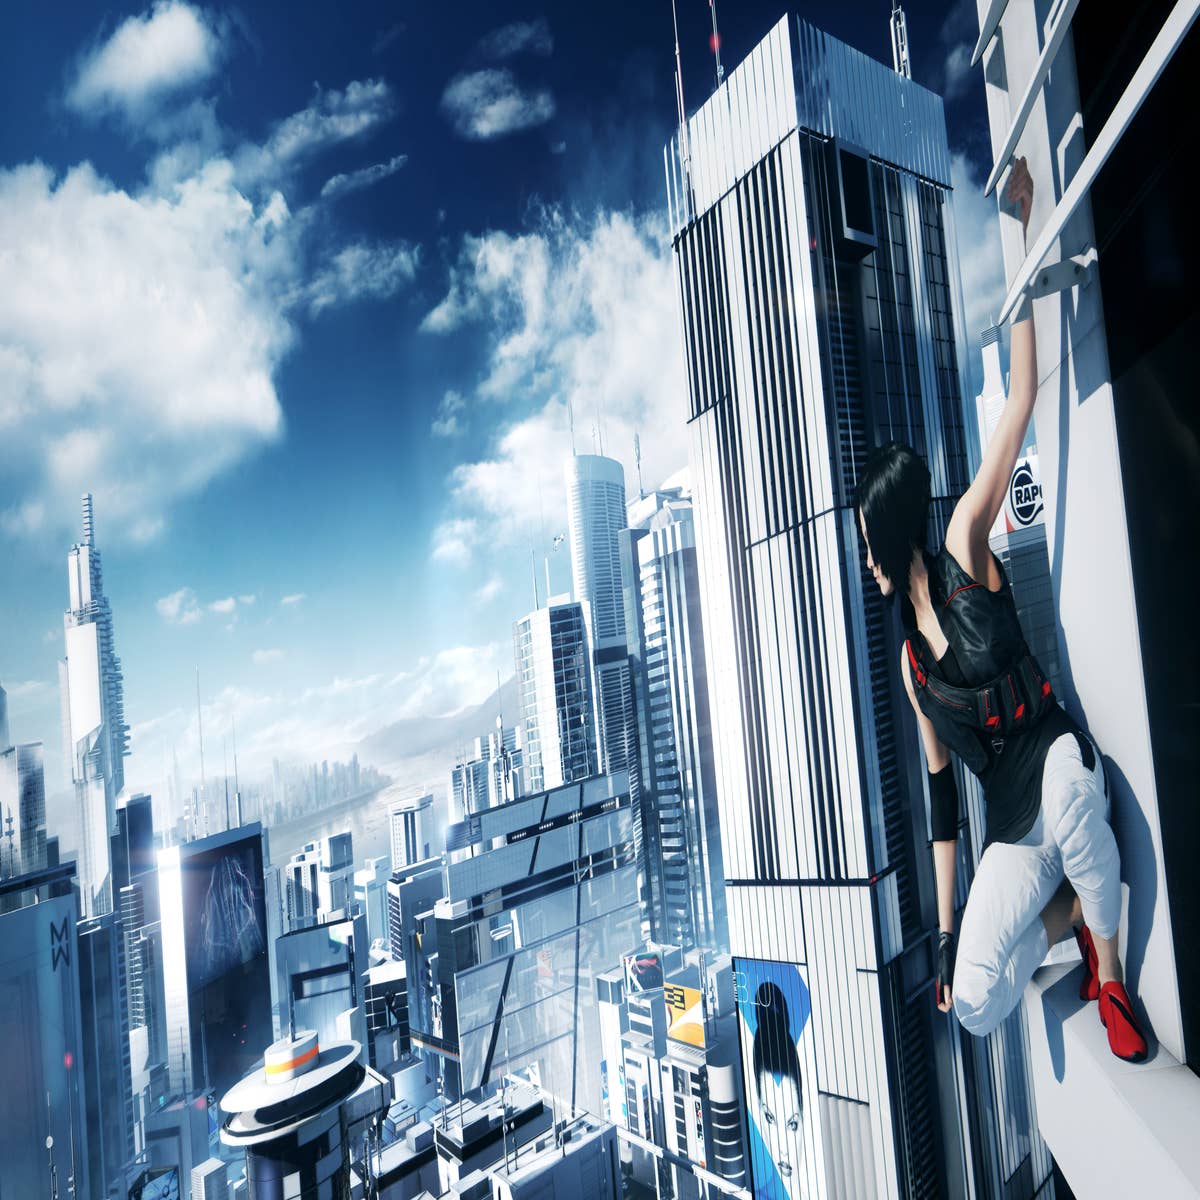 Mirror's Edge reboot re-announced as Mirror's Edge Catalyst